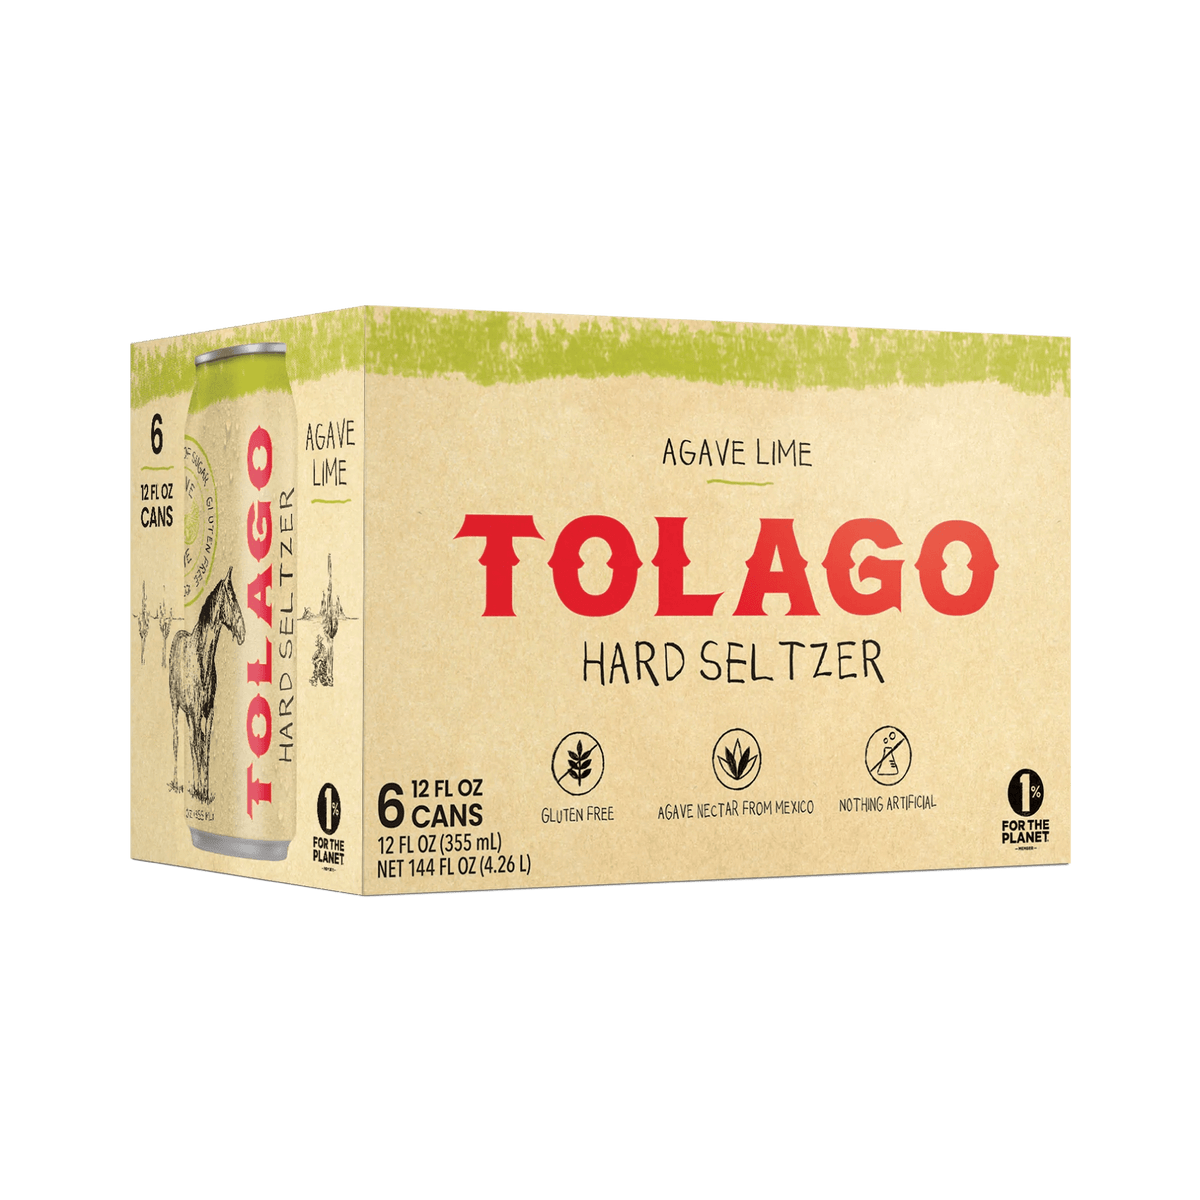 Tolago Agave Lime Hard Seltzer 6 Pack - Barbank